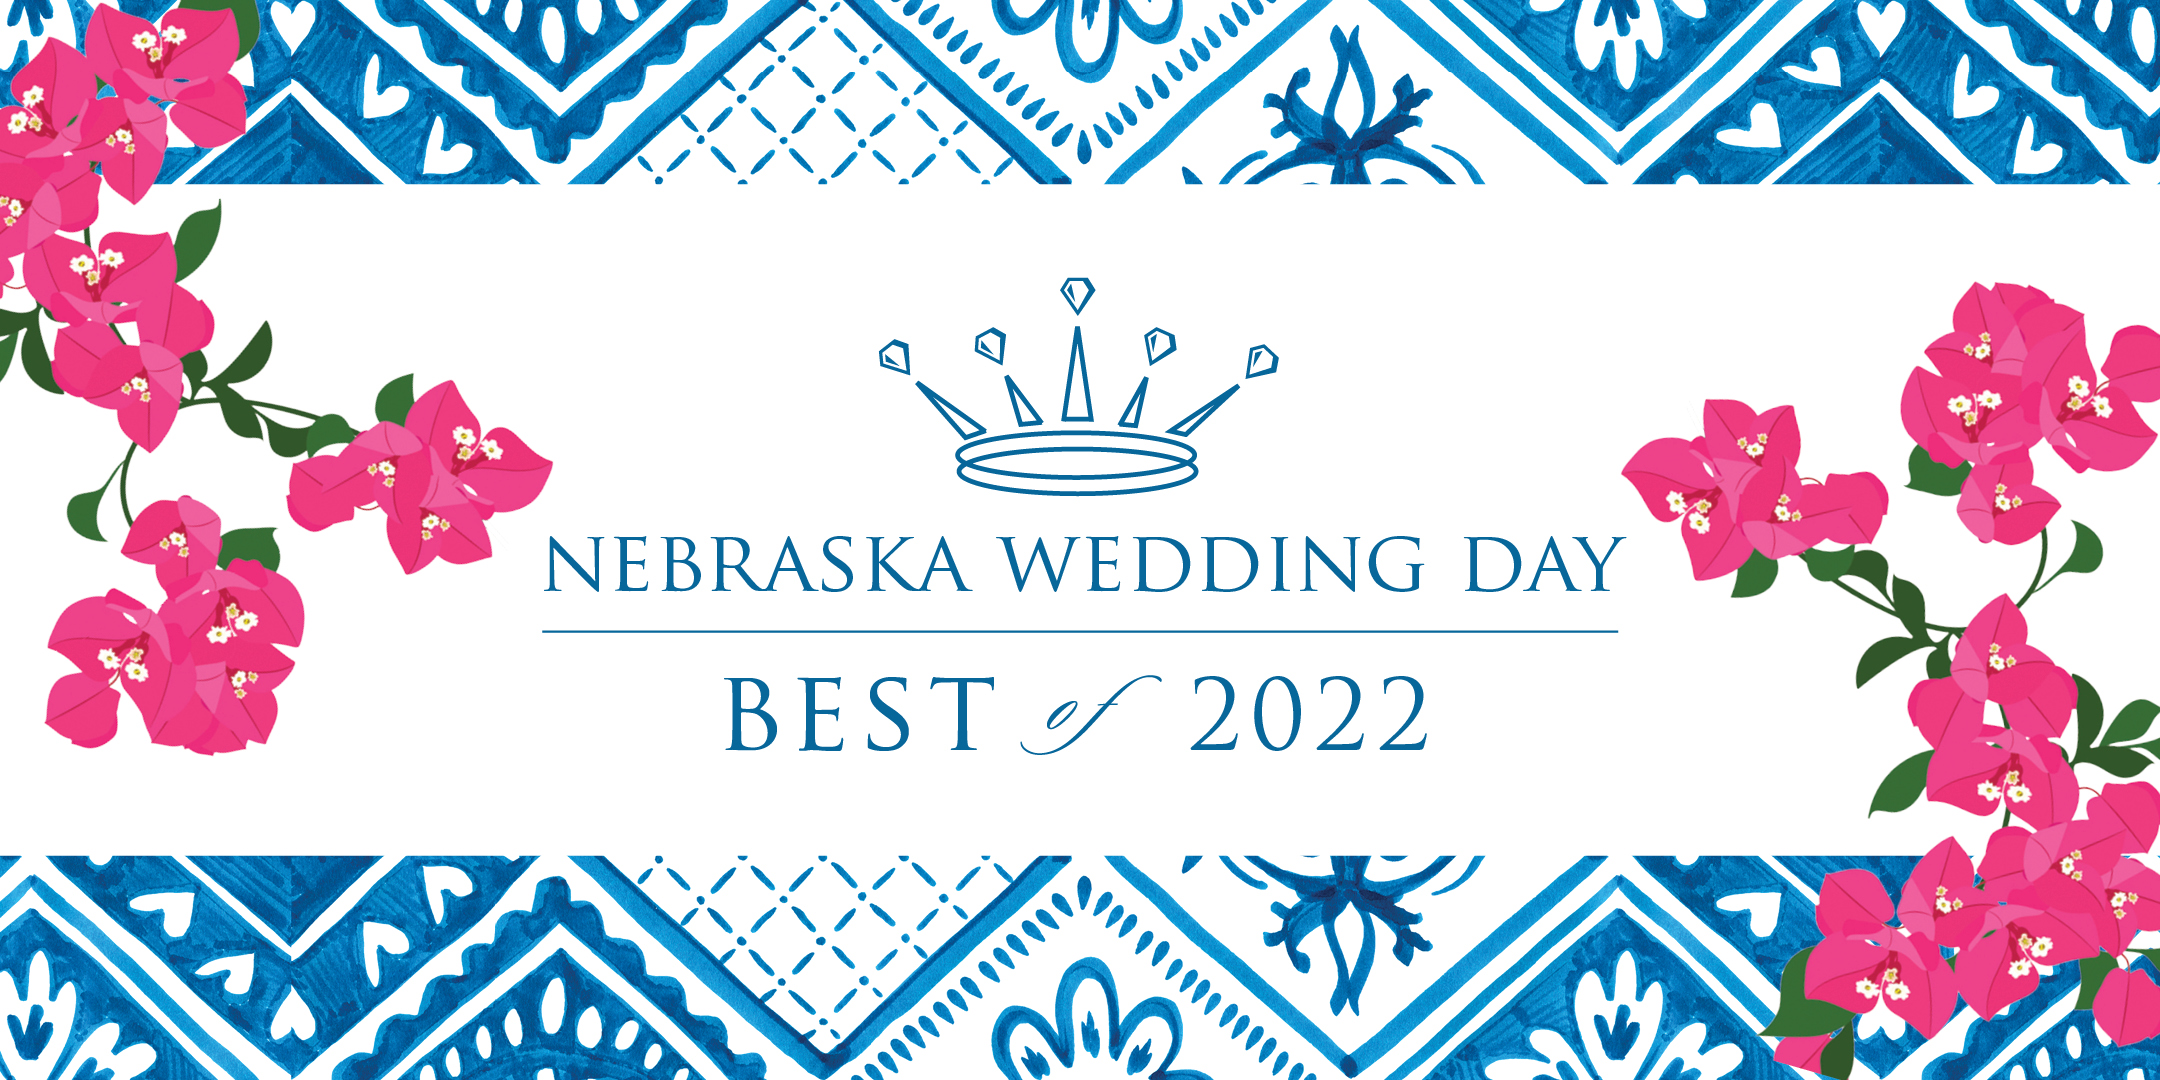 Nebraska Wedding Day's Best of 2022 Awards